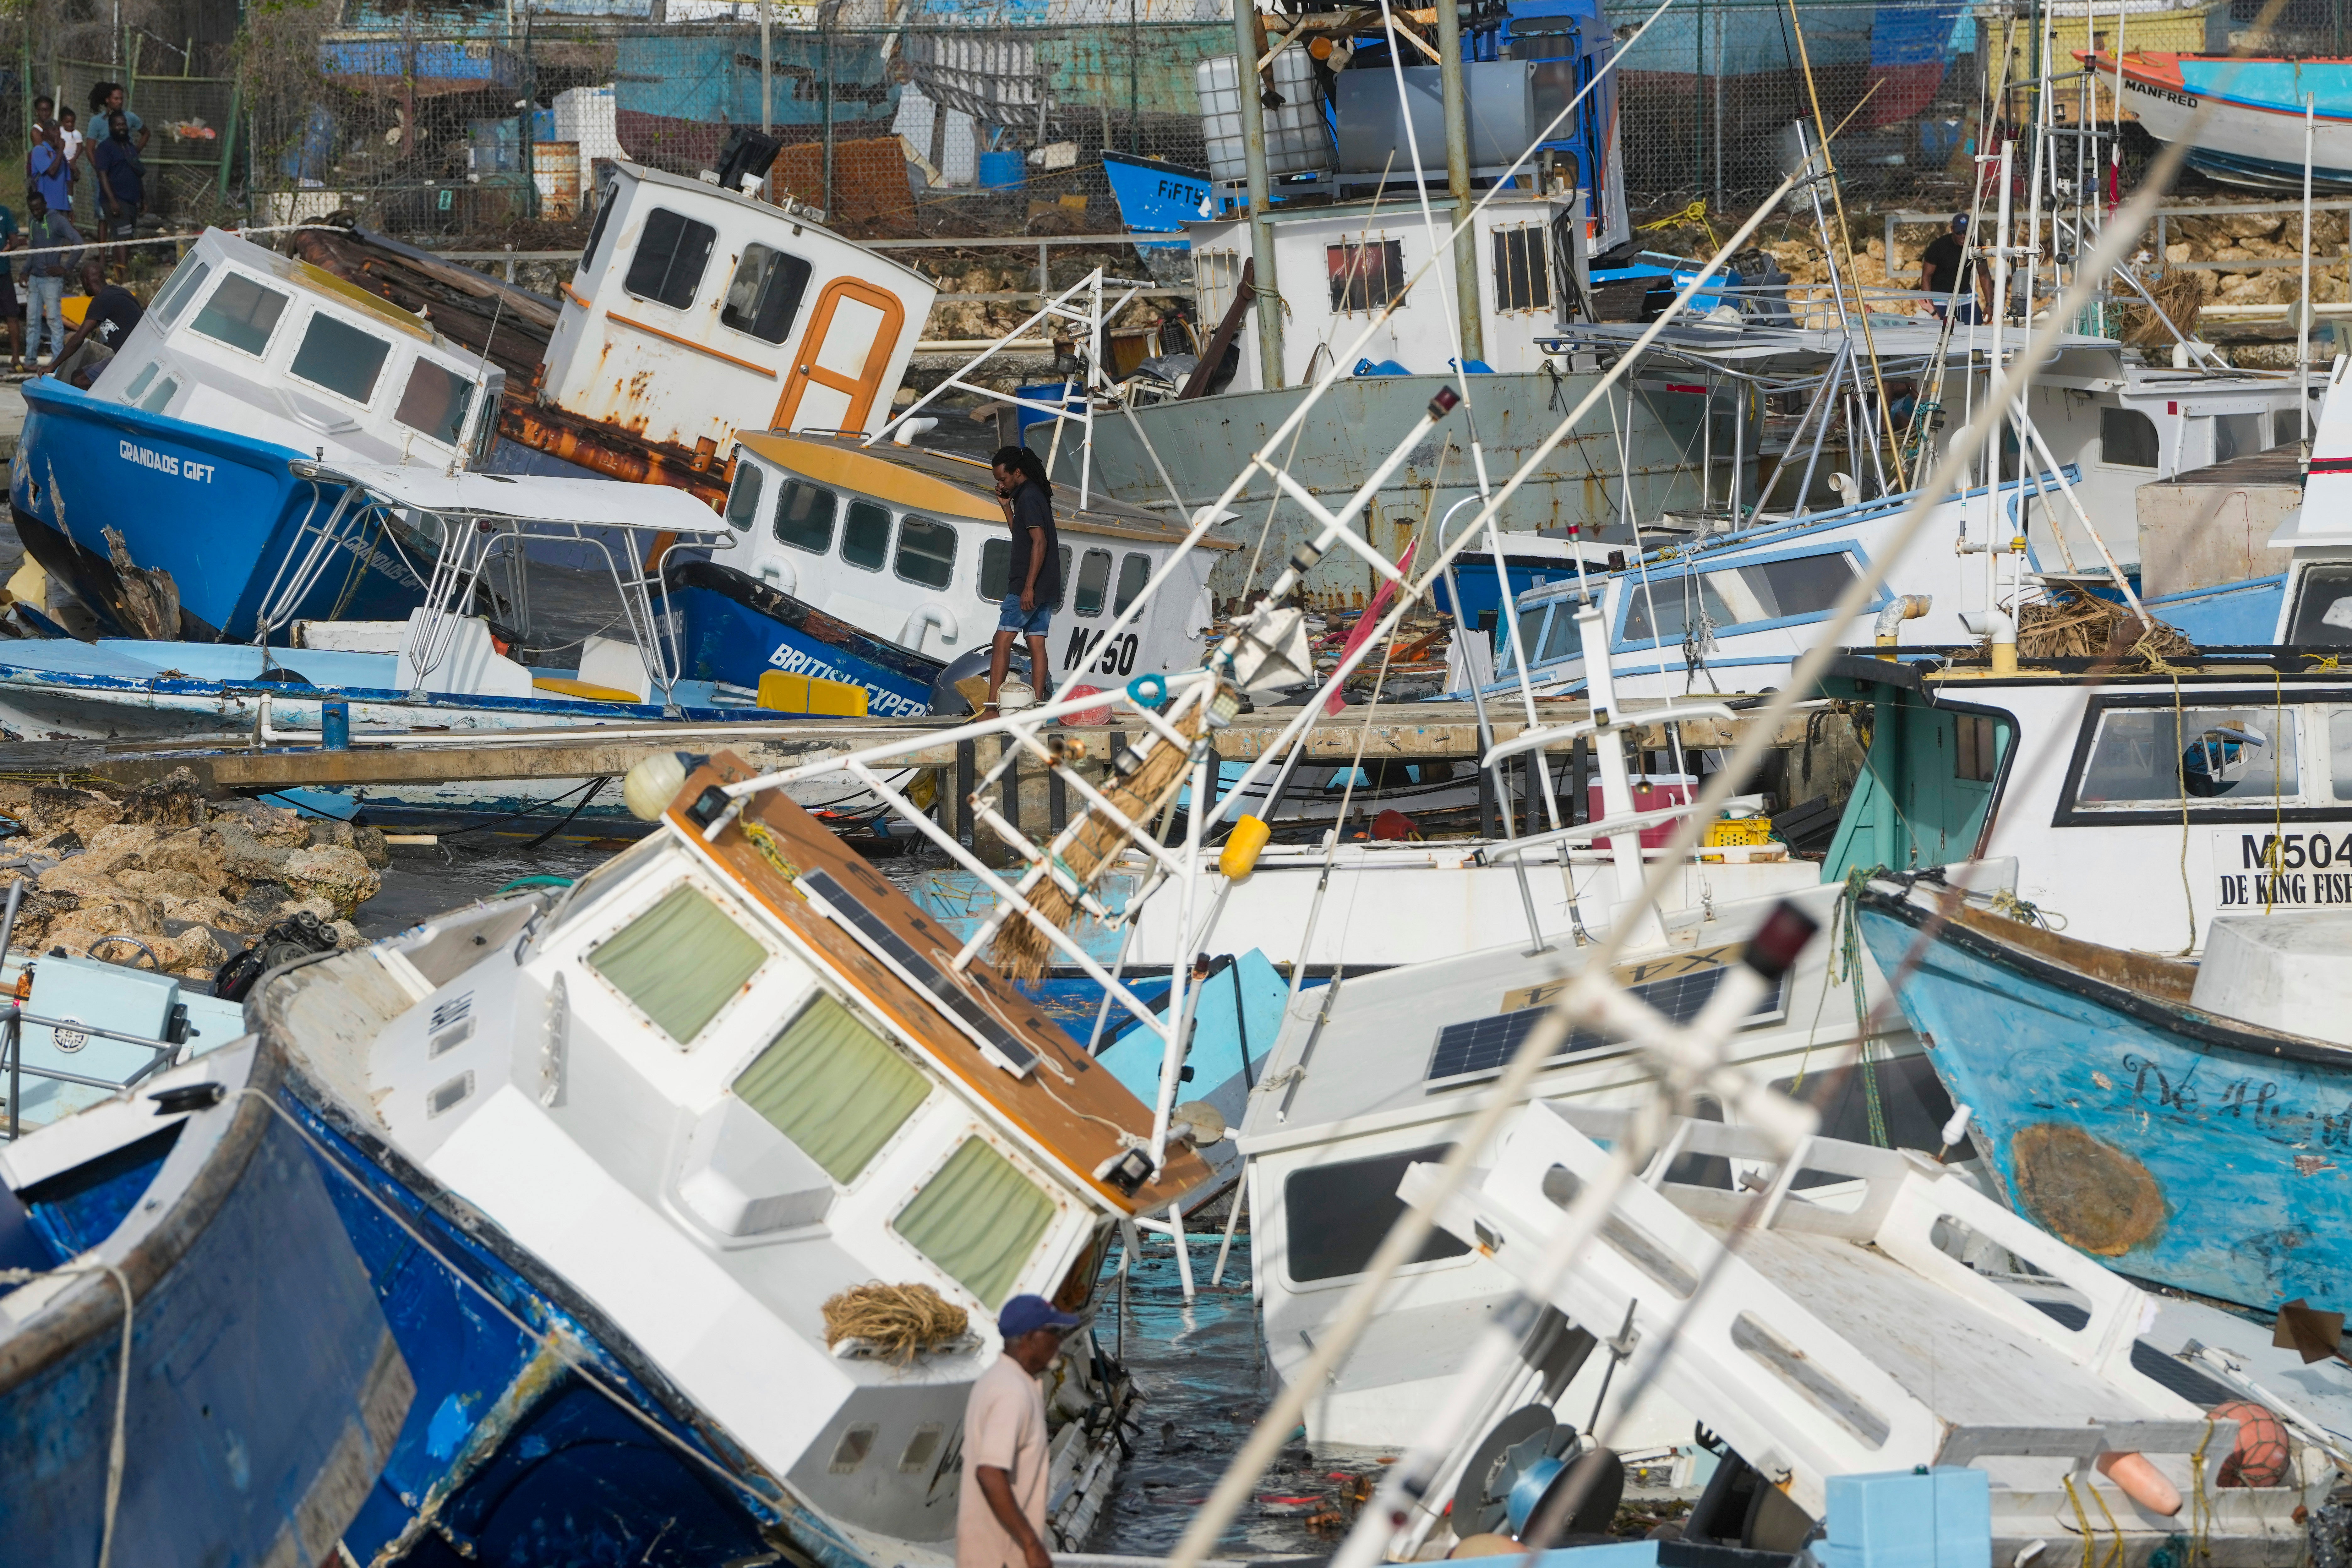 A man looks at damaged fishing boats after Hurricane Beryl blew through Barbados